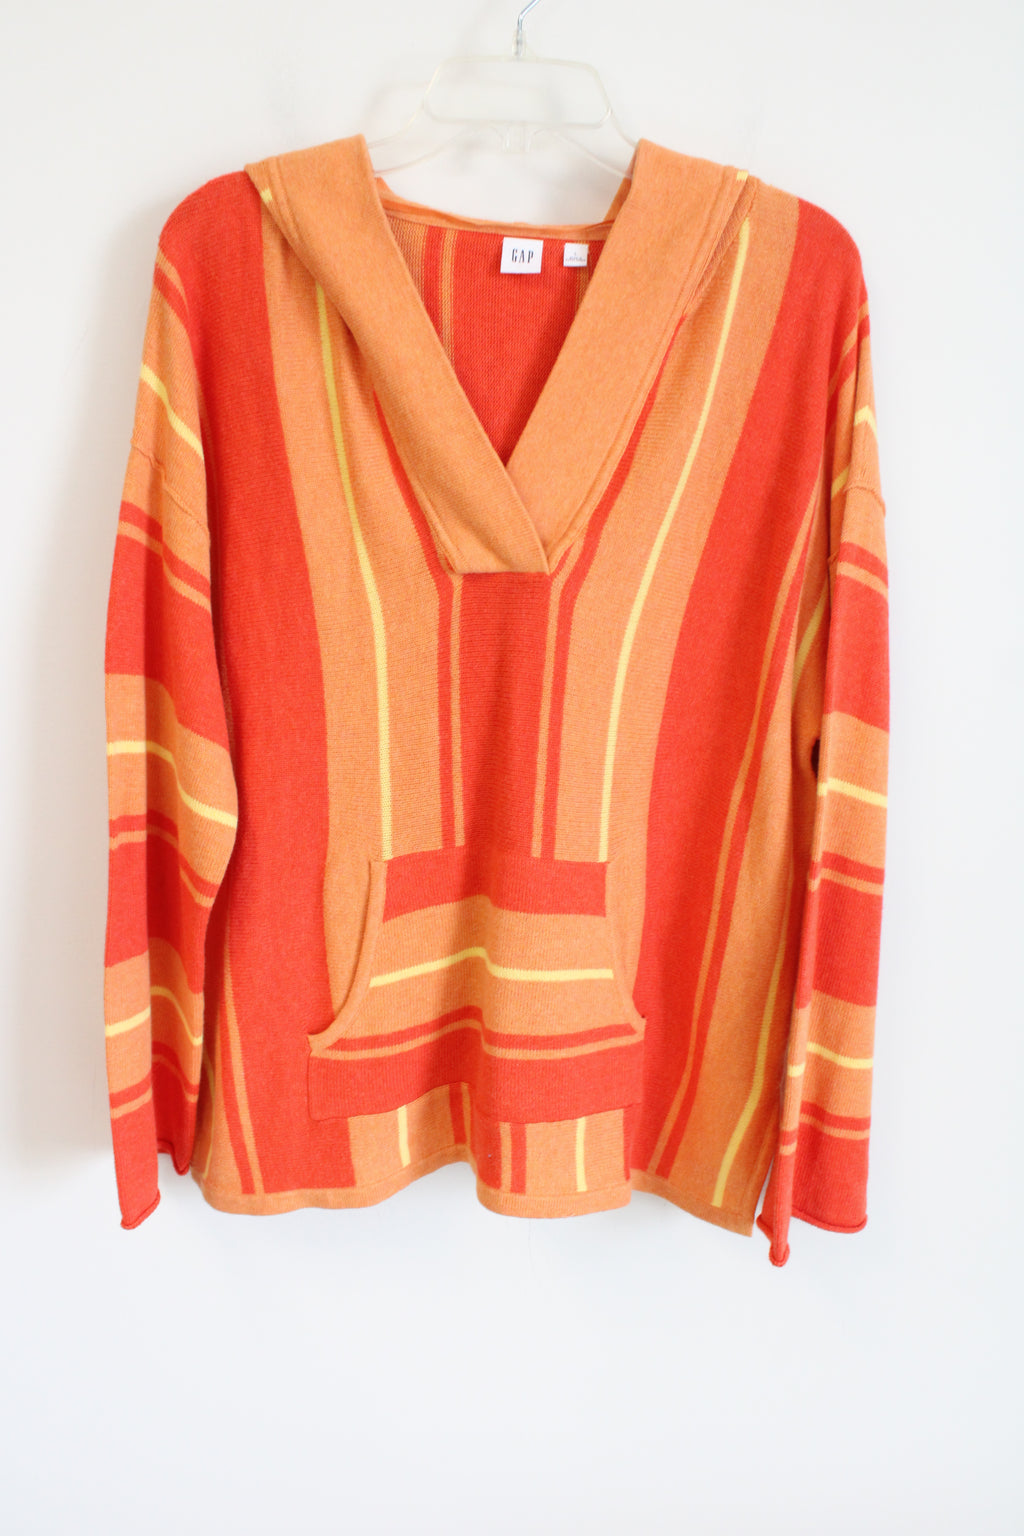 Gap Orange Knit Striped Boho Sweater | L